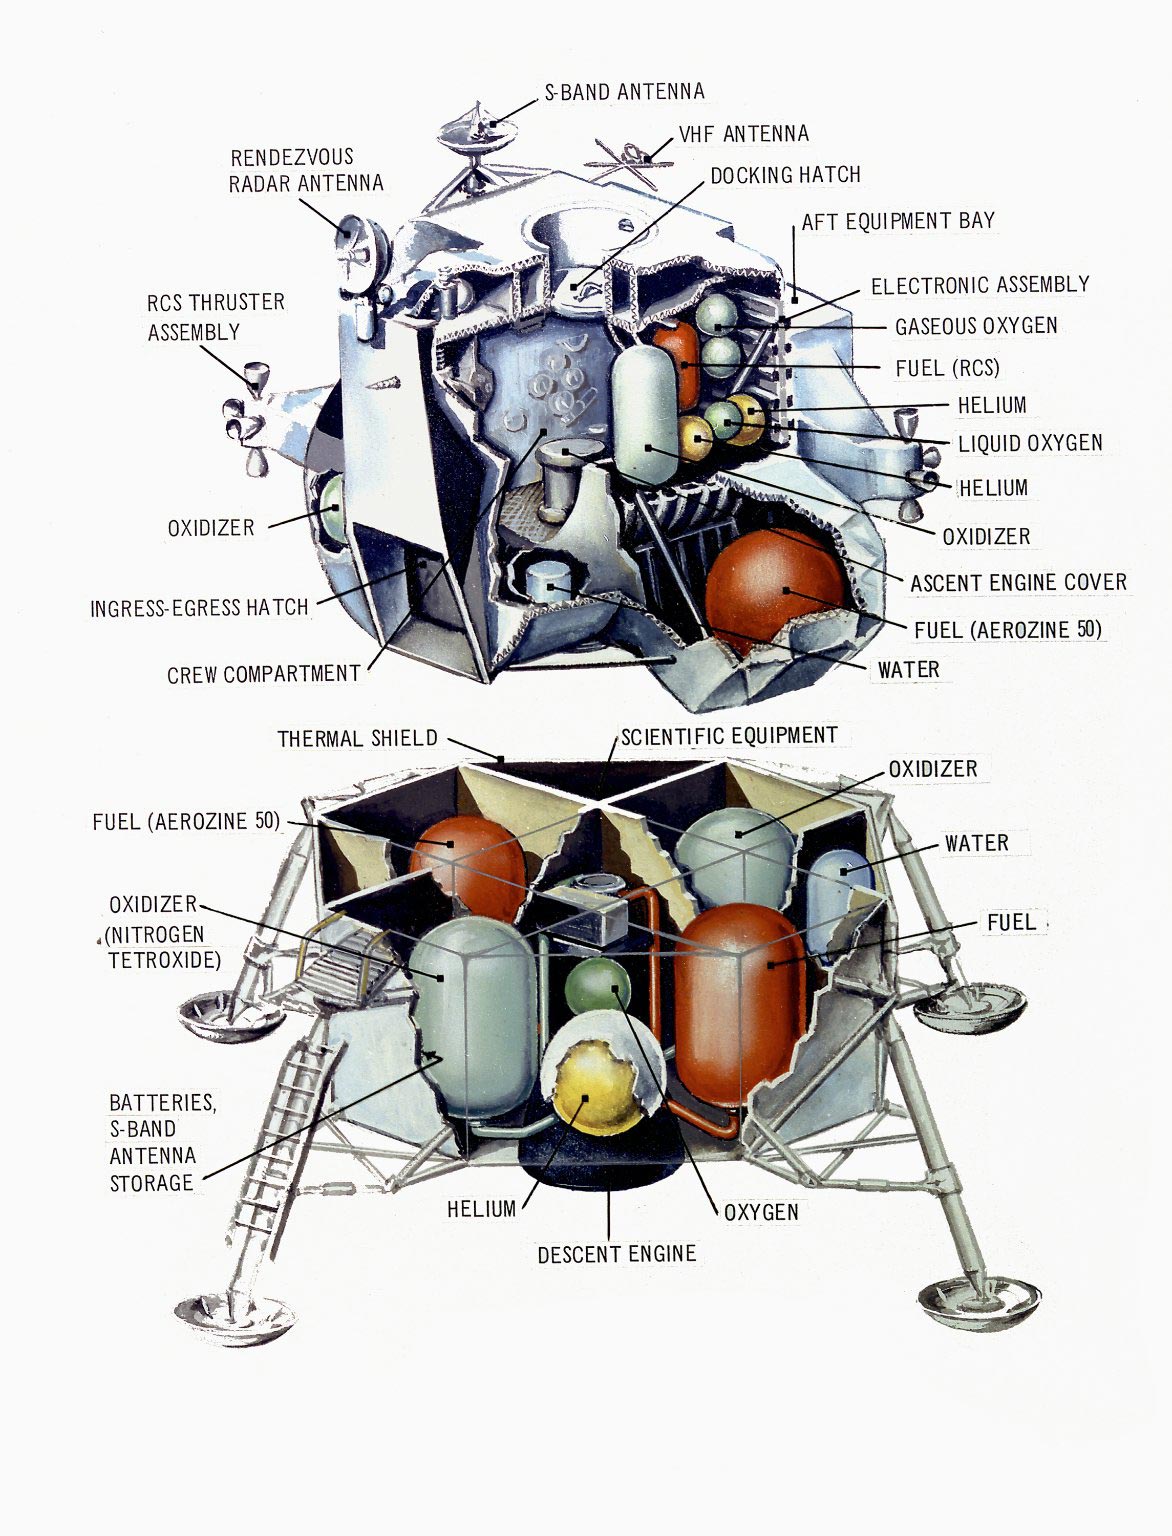 Apollo Lunar Module cutaway